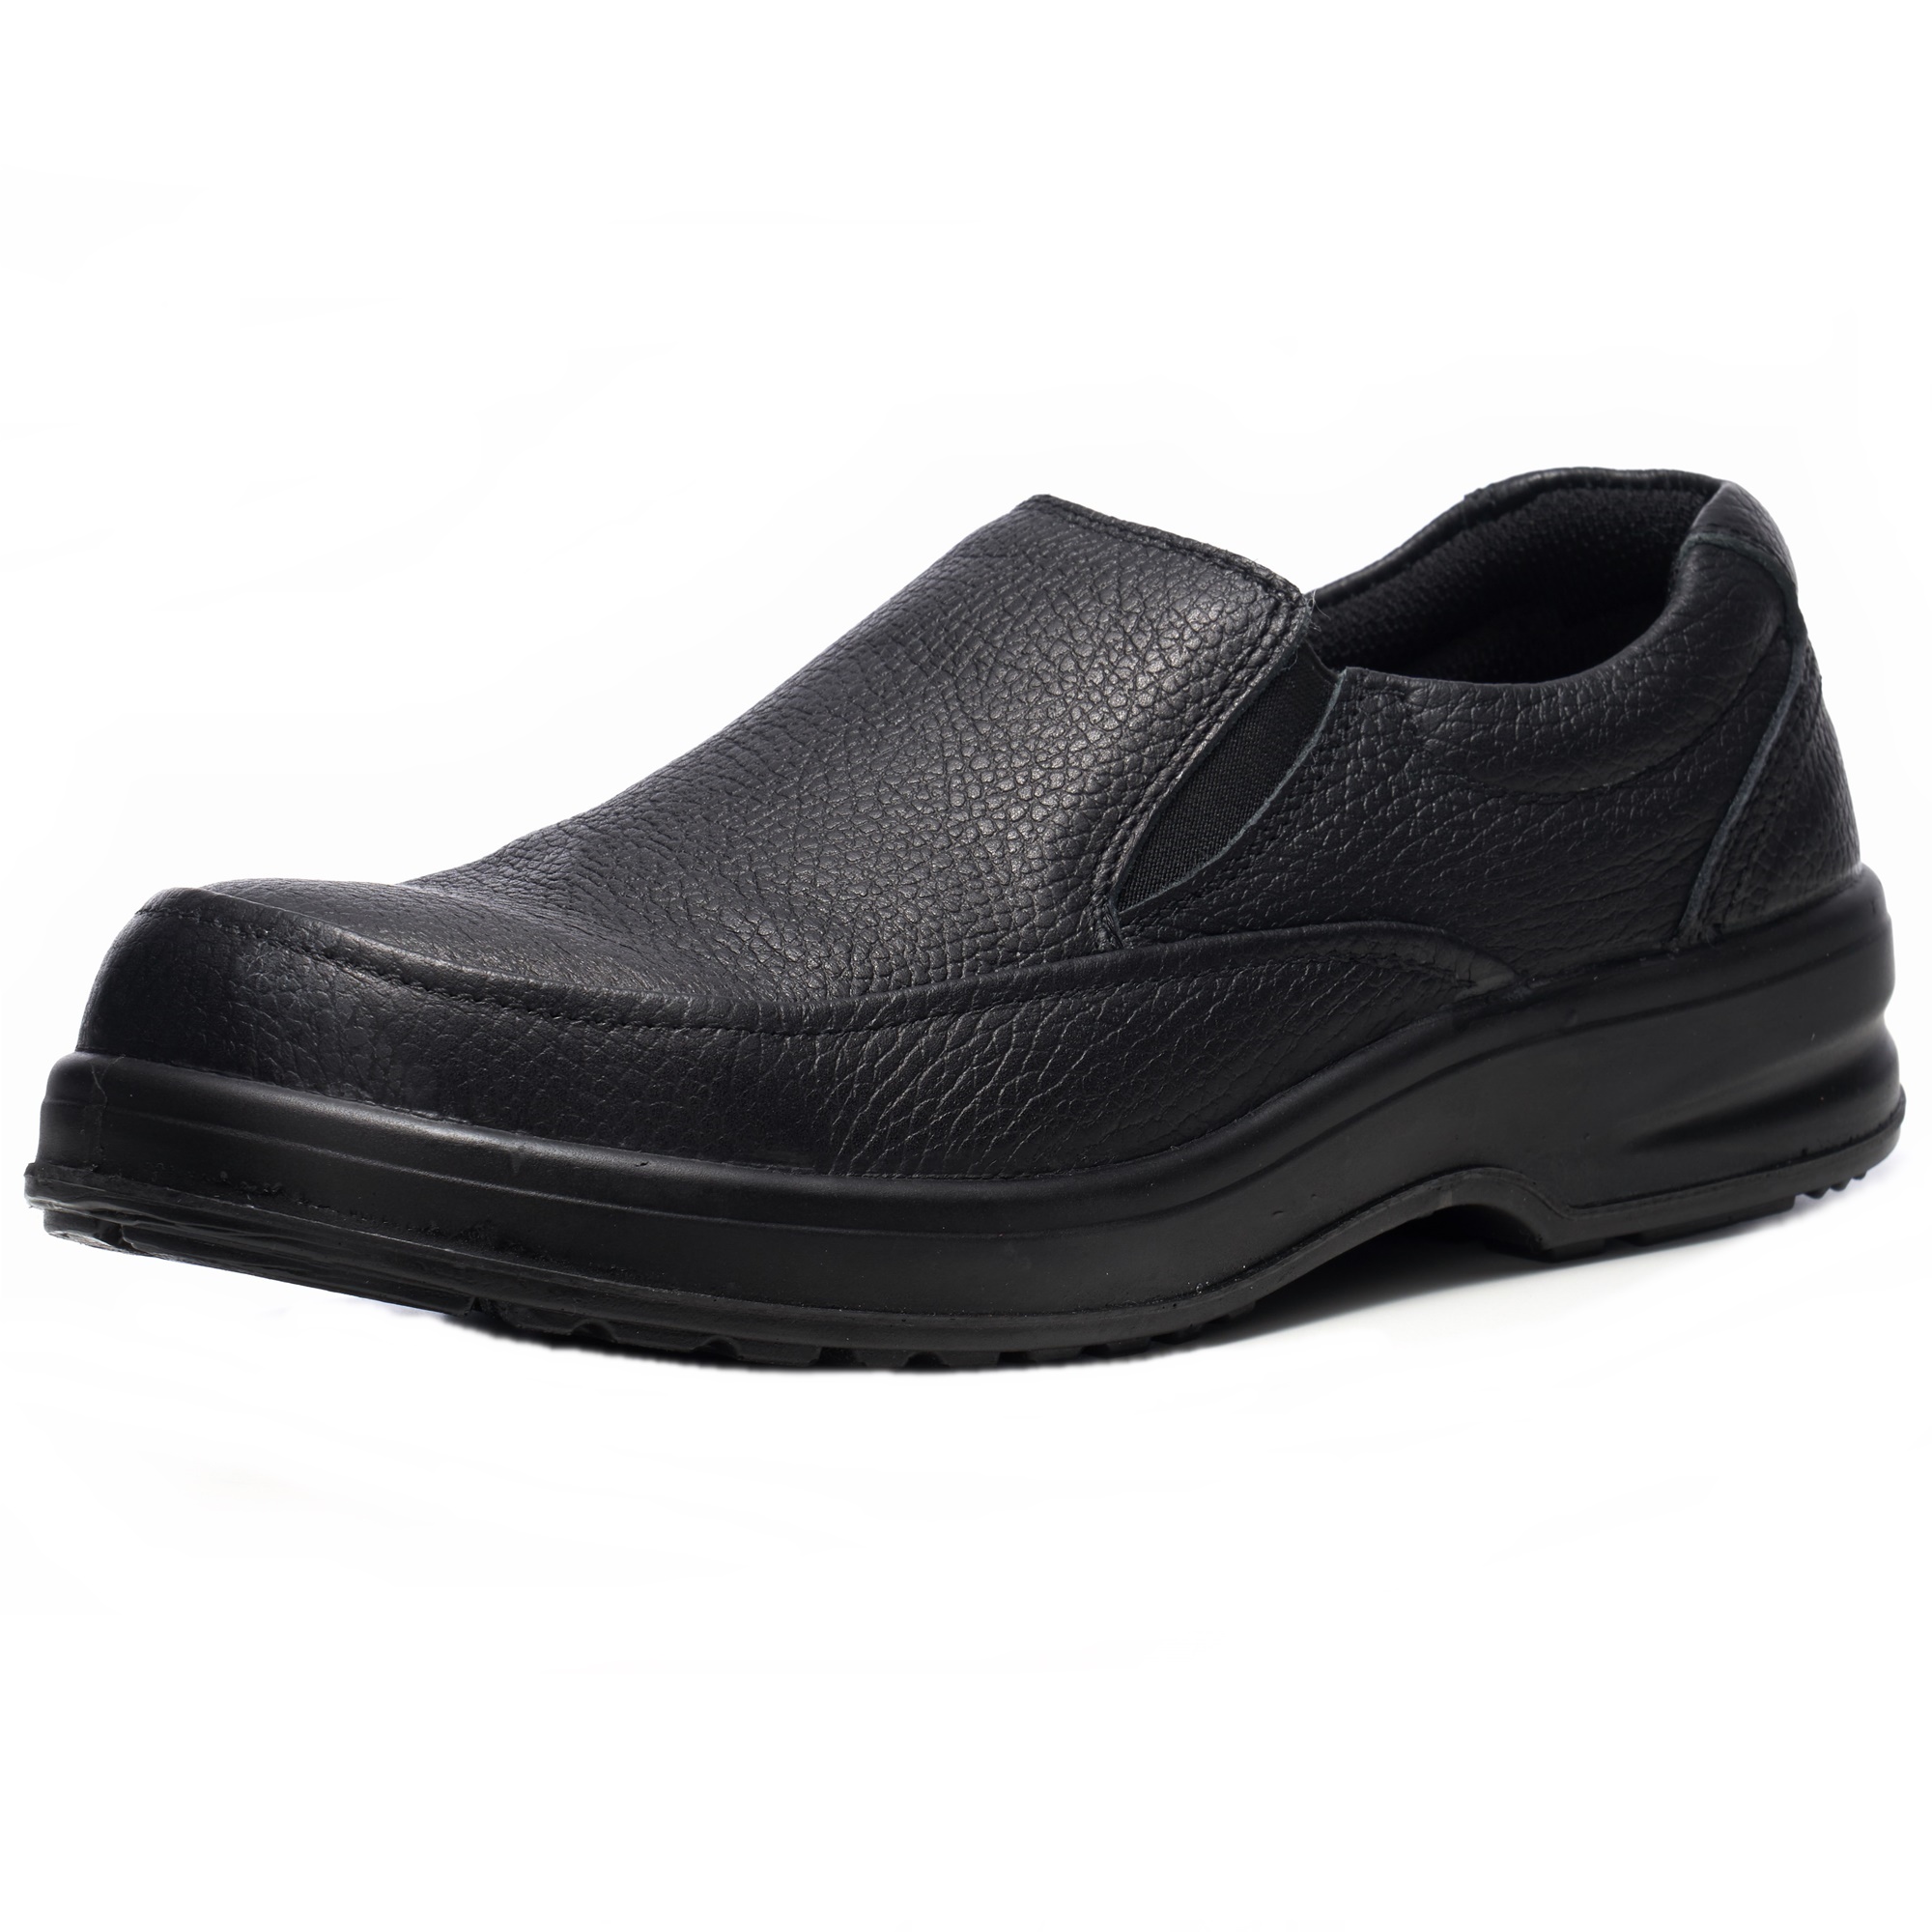 work shoe slip resistant